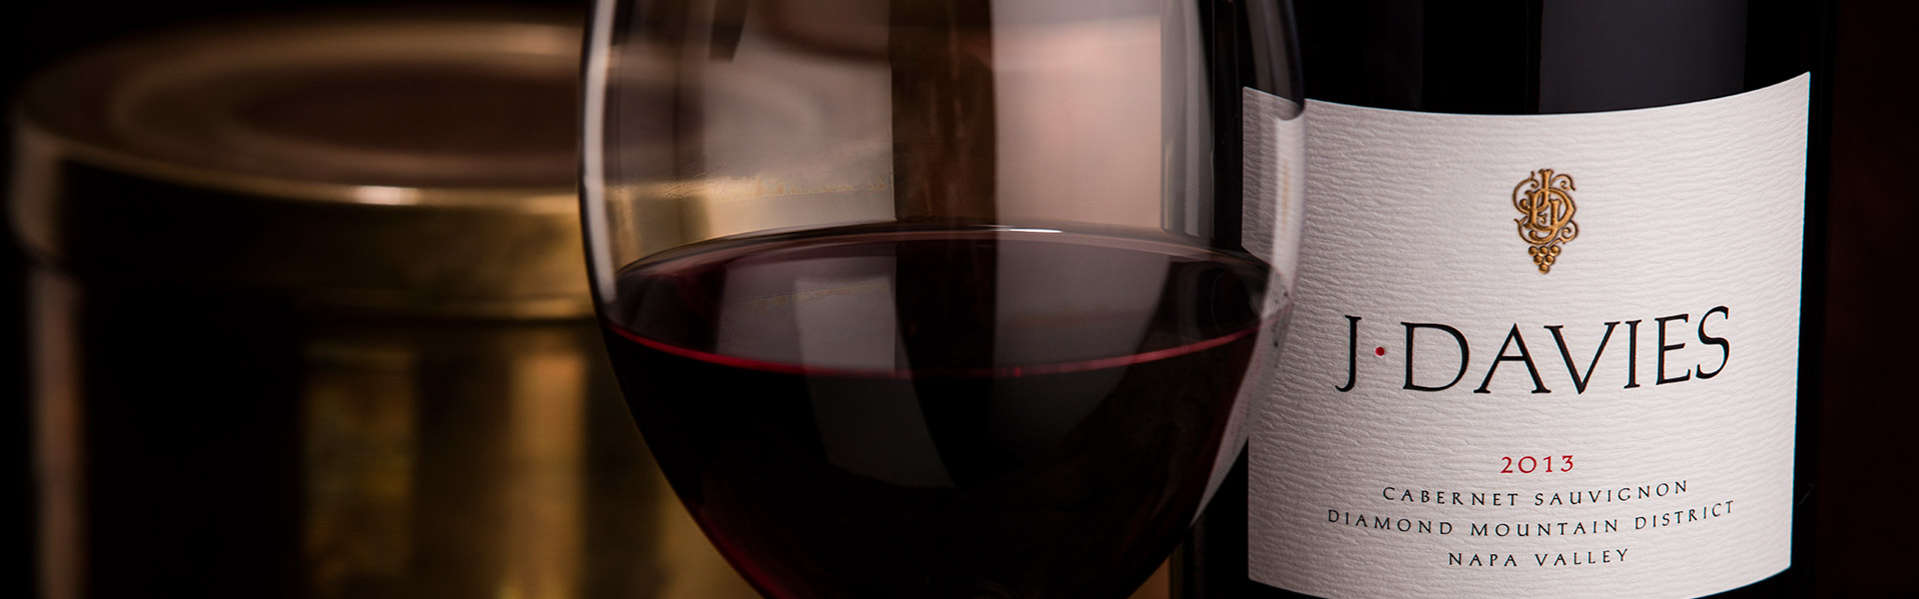 Full wine glass and bottle of J. Davies 2013 Estate Cabernet Sauvignon, Diamond Mountain District, Napa Valley